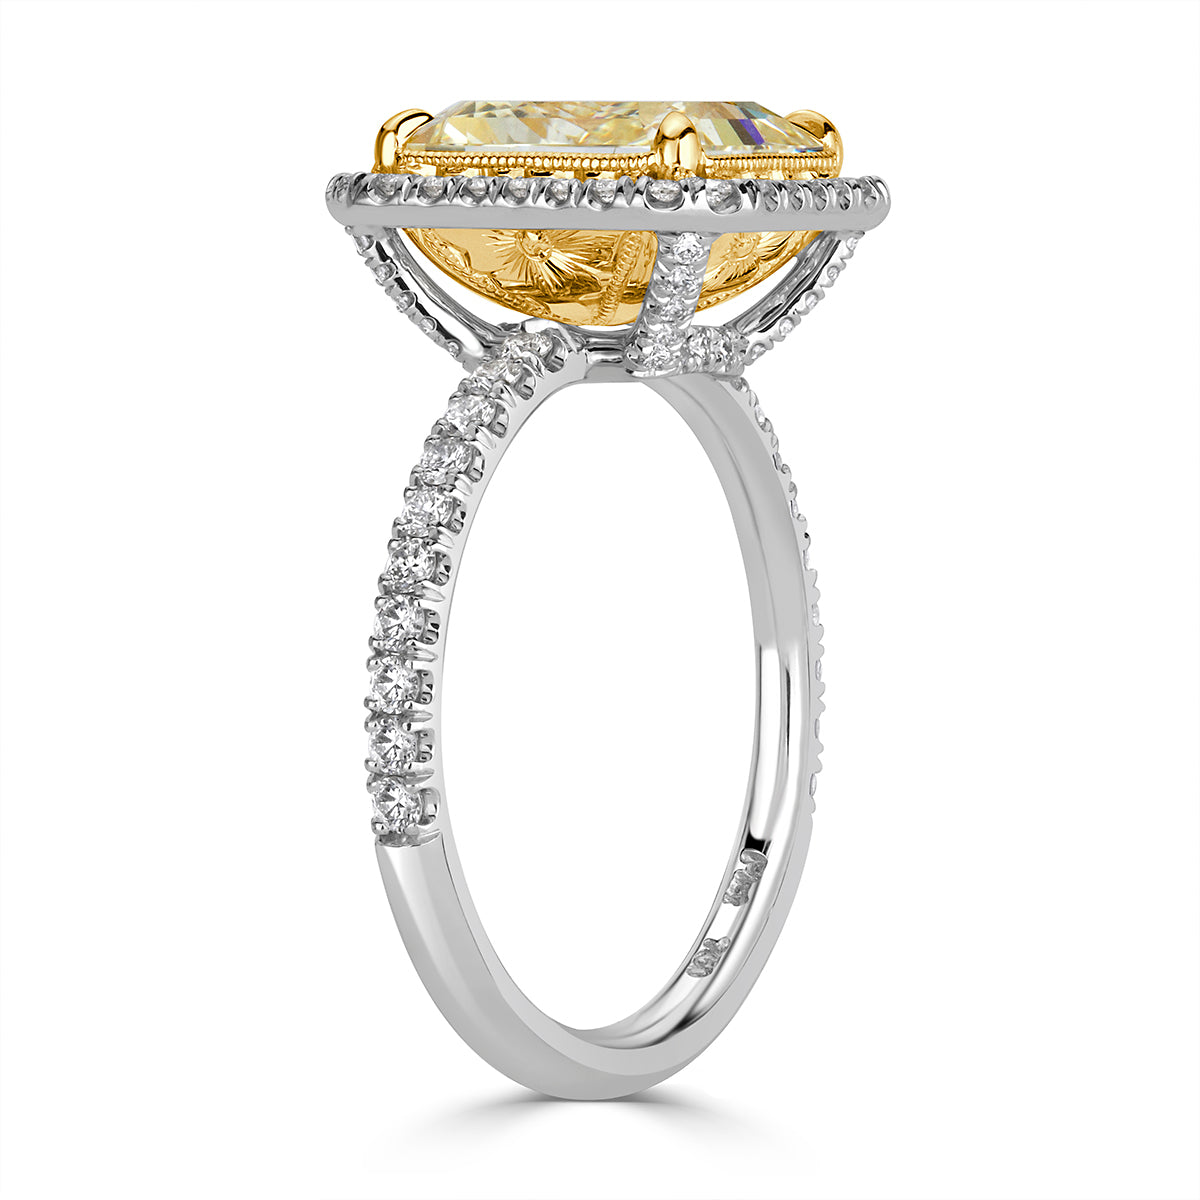 4.0 ct Light Yellow Radiant Cut Diamond Engagement Ring in 14k White Gold-Black Diamonds New York